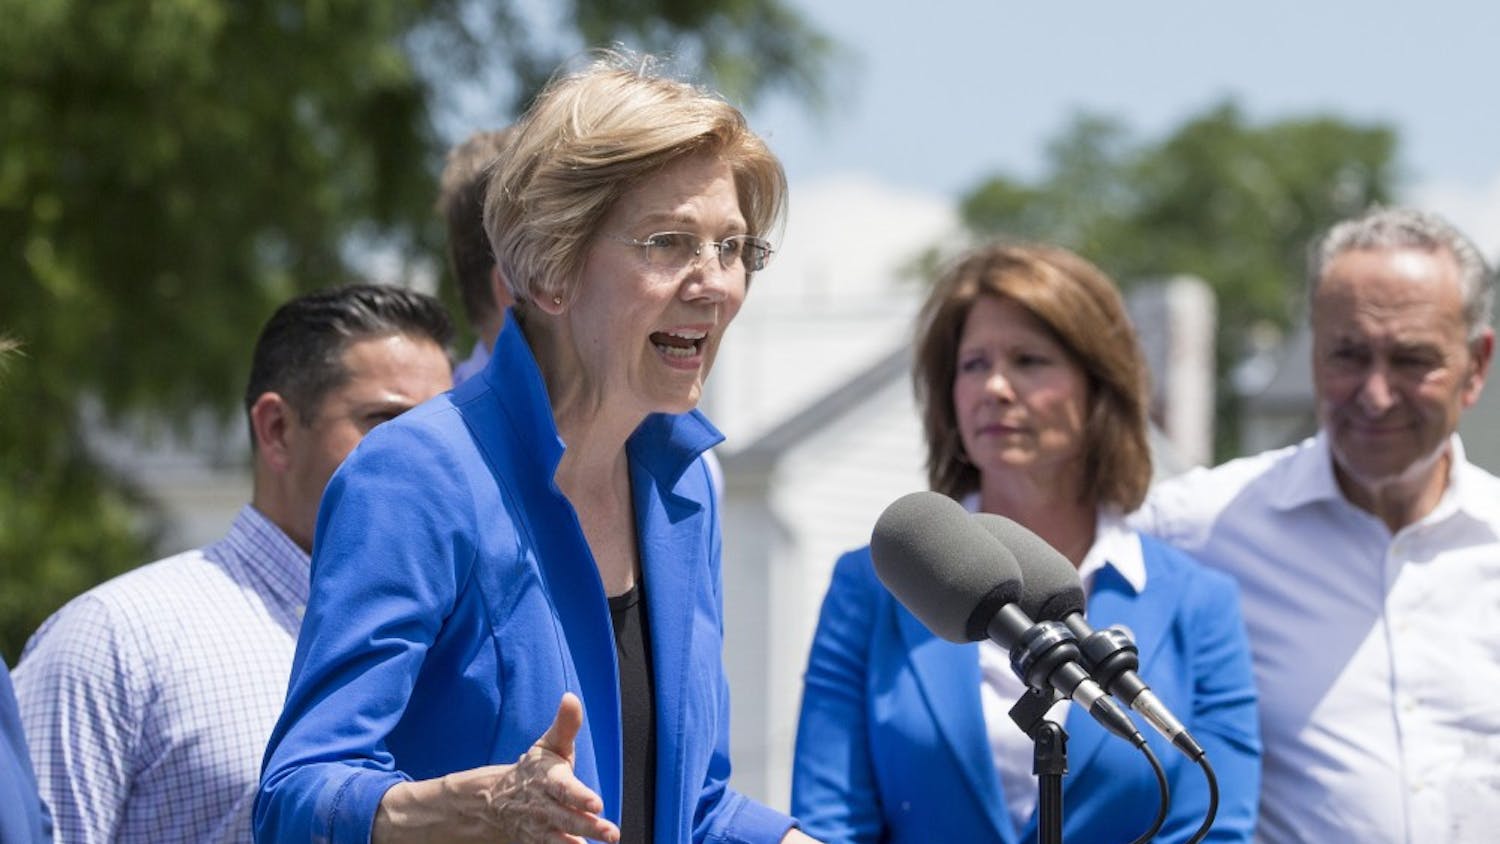 Sen. Elizabeth Warren (D-Mass.) speaks at a news conference alongside the Congressional Democratic Leadership on July 24, 2017, at Rose Hill Park in Berryville, Va. (Alex Edelman/Zuma Press/TNS)